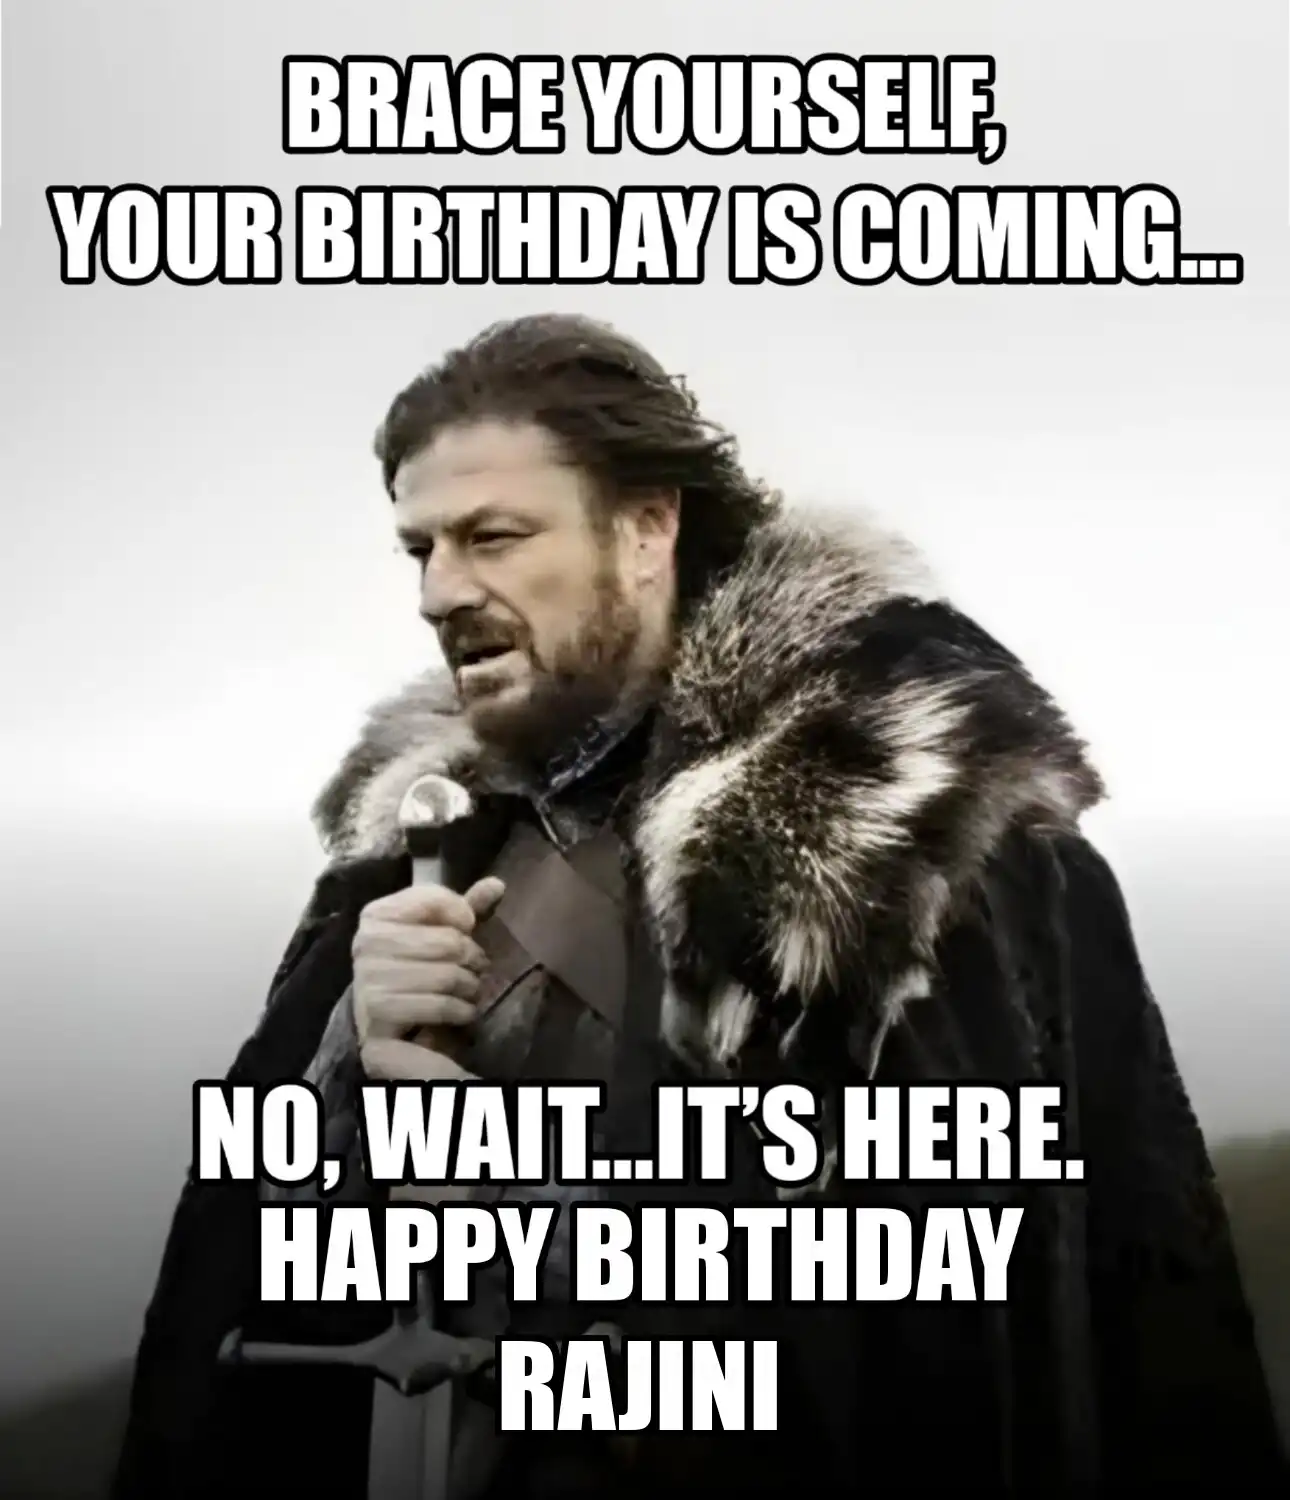 Happy Birthday Rajini Brace Yourself Your Birthday Is Coming Meme